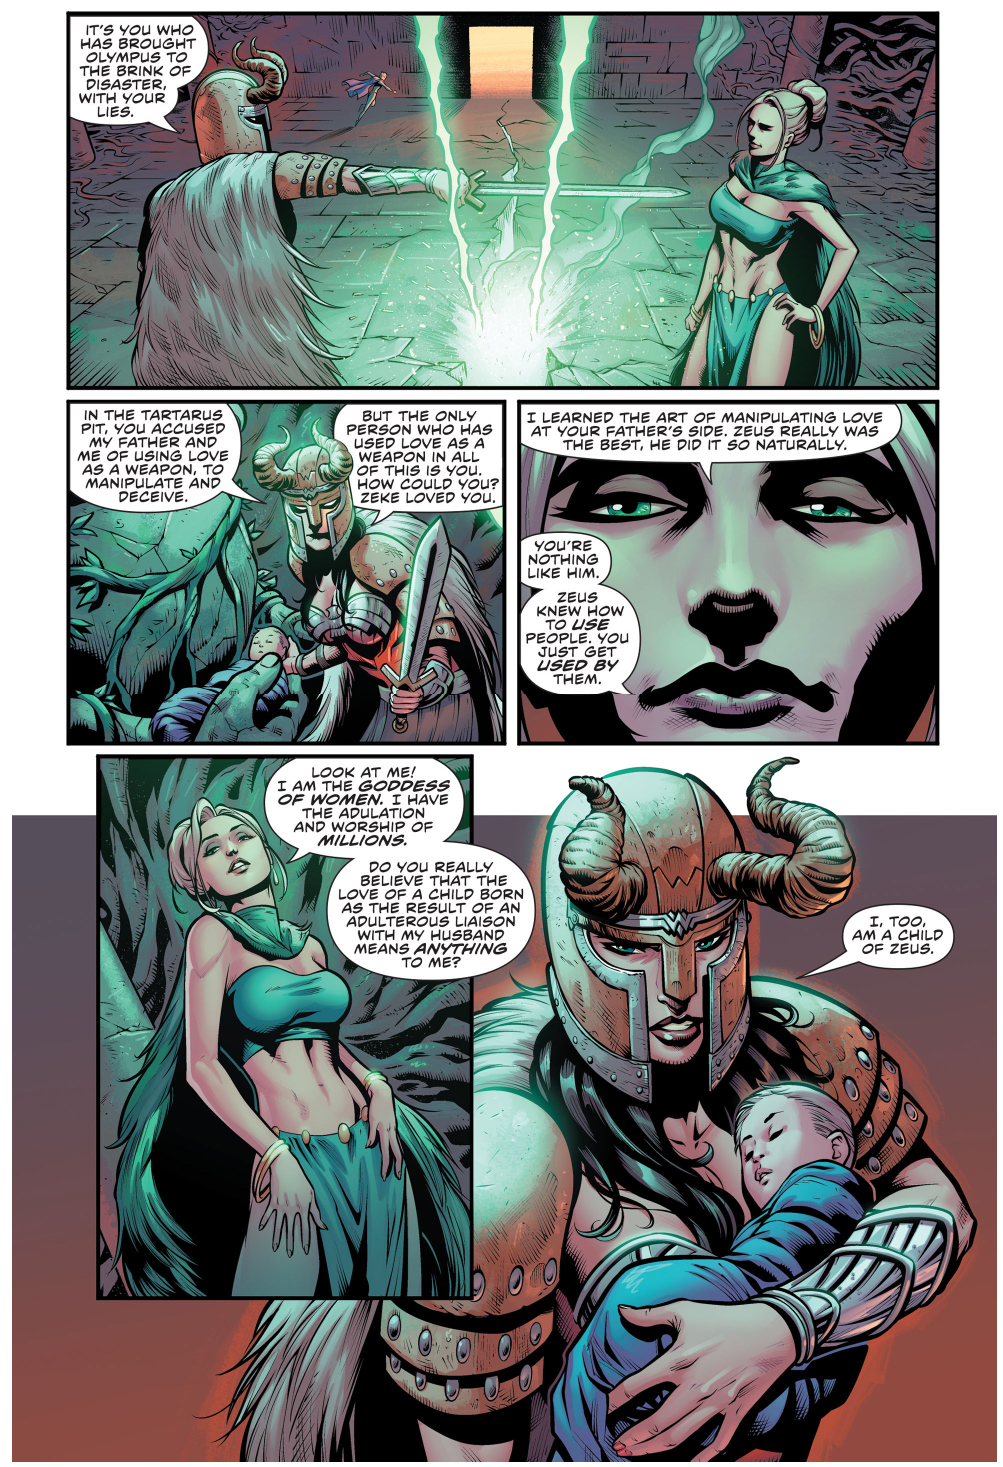 Wonder Woman Saves Zeus's Life